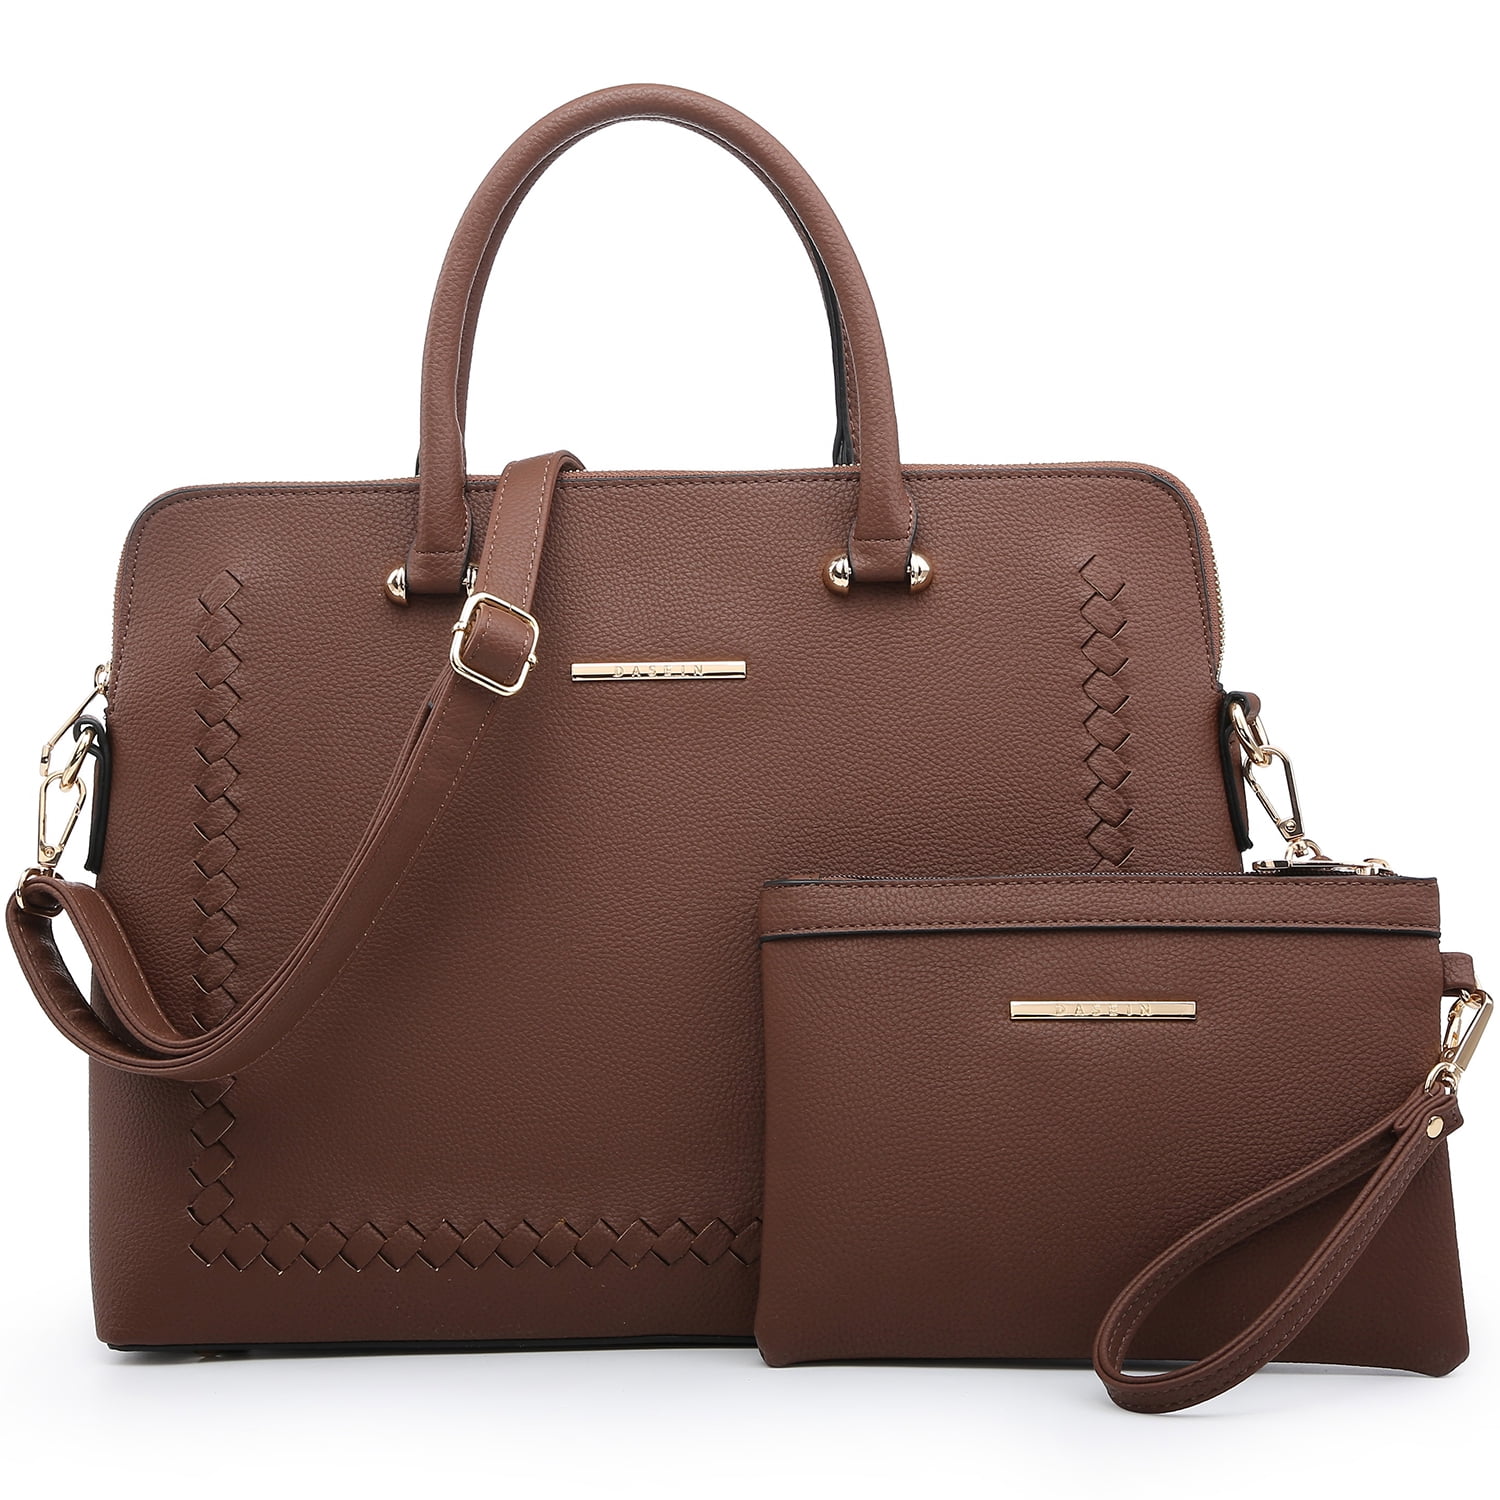 Jennifer PU Leather Top-Handle Handbags Irises In Bloom Single-Shoulder Tote Crossbody Bag Messenger Bags For Women